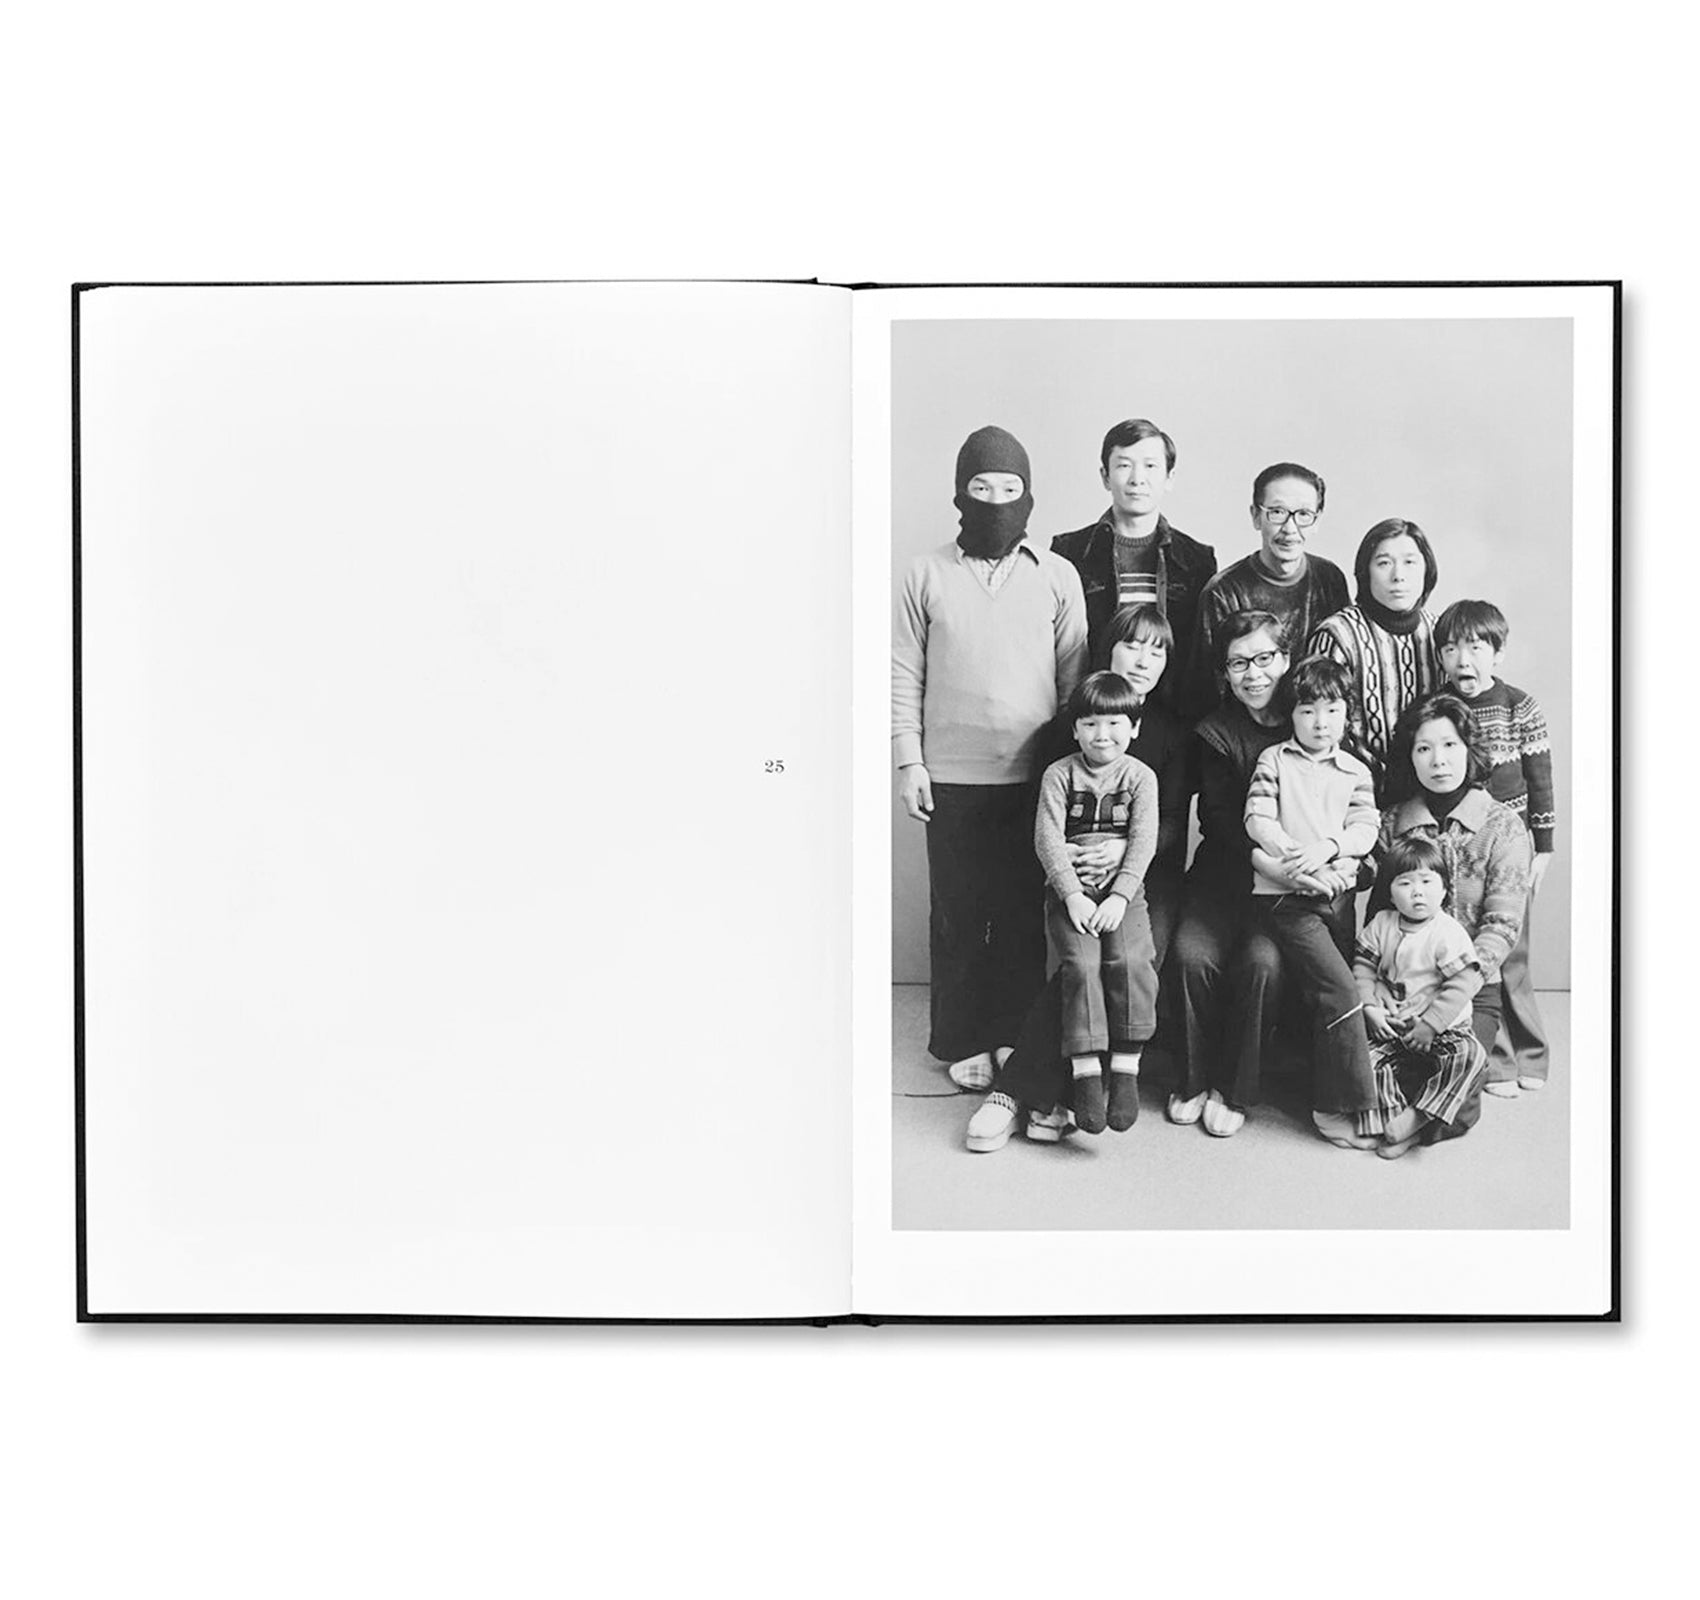 FAMILY by Masahisa Fukase [SPECIAL EDITION]